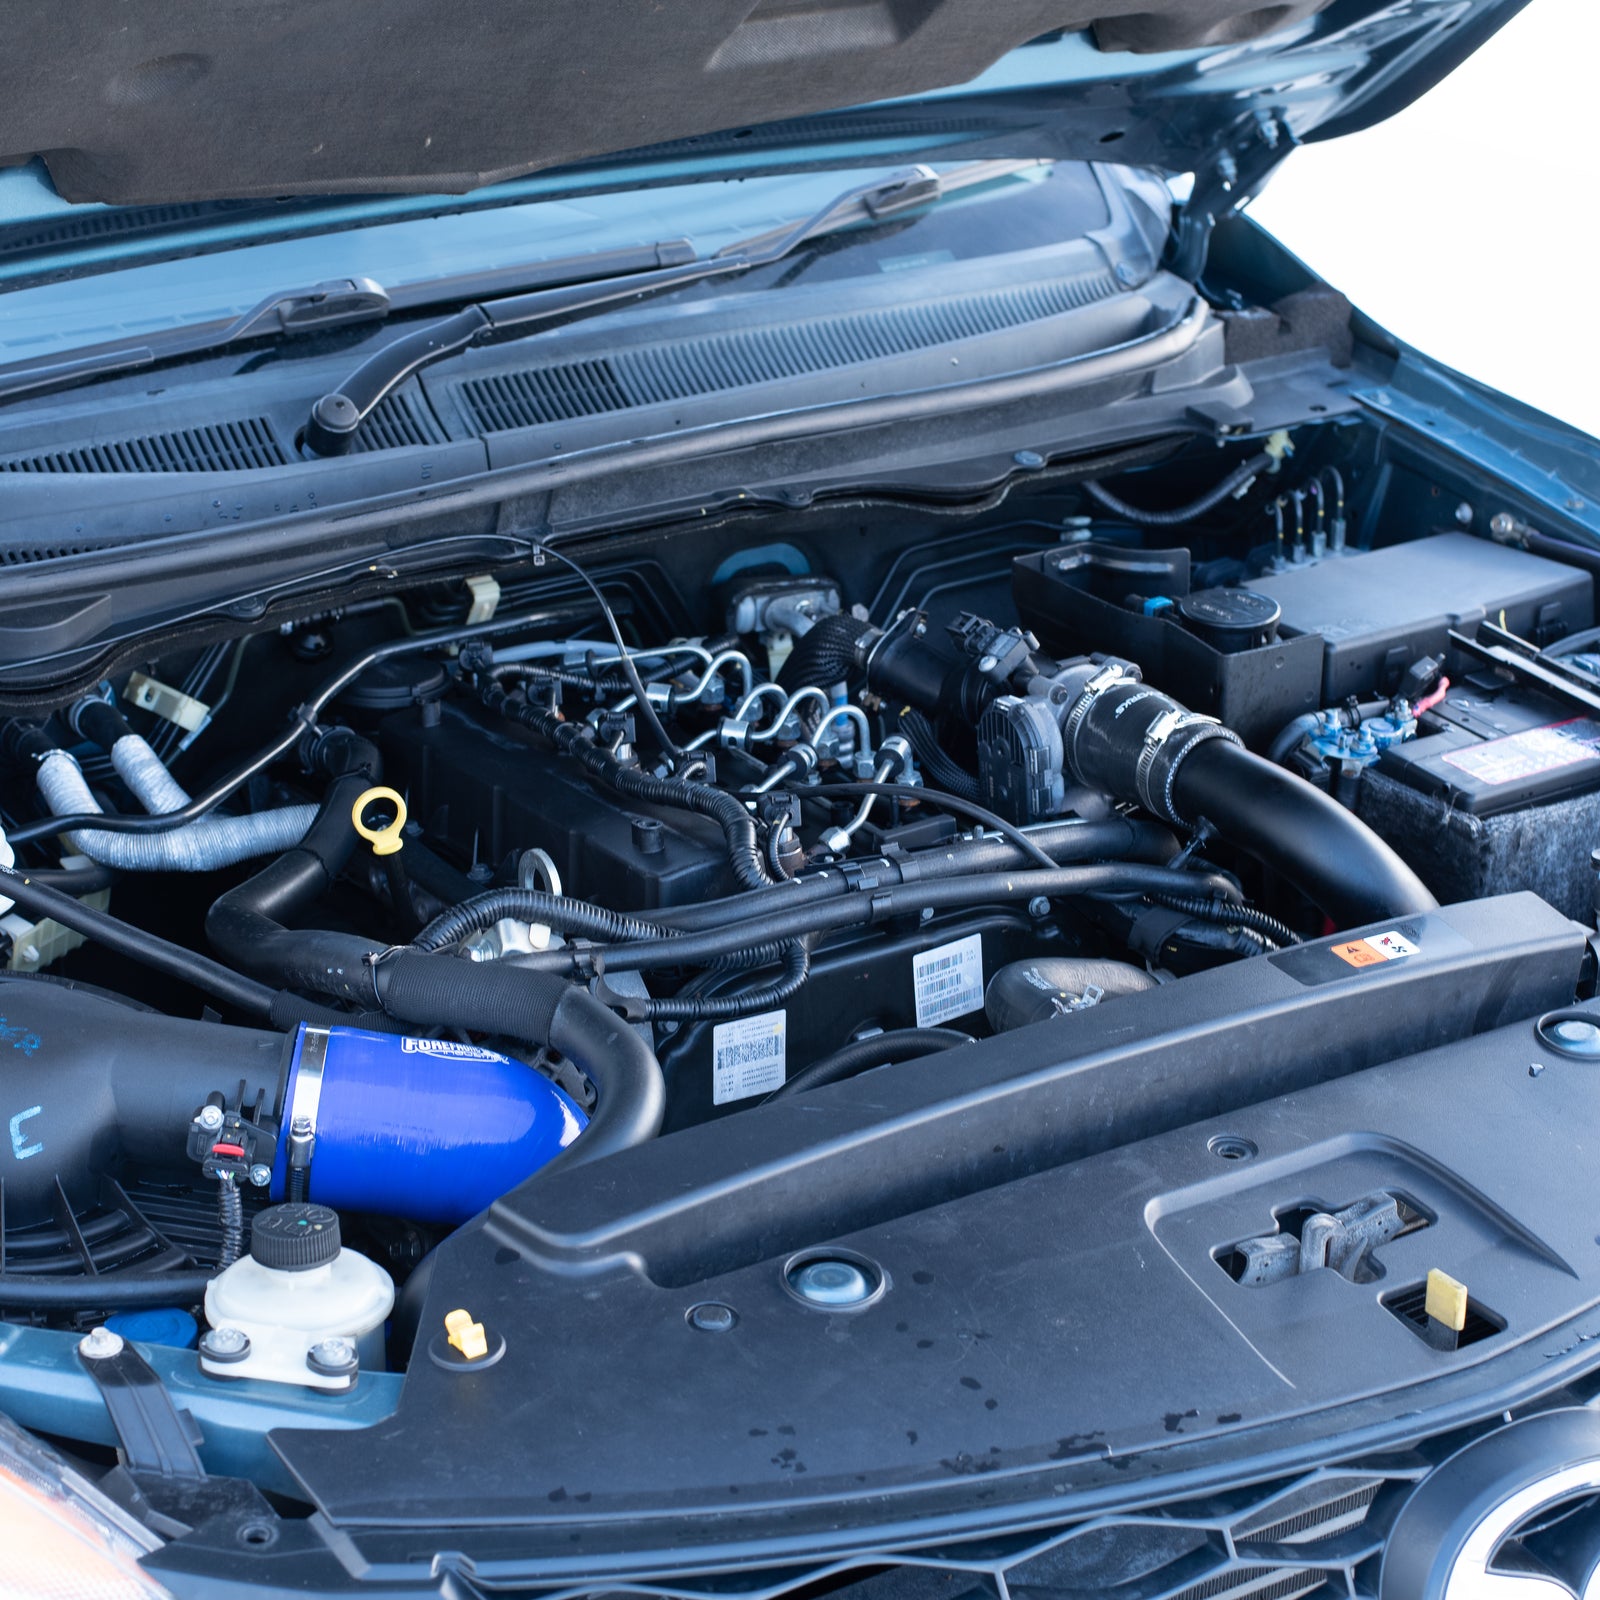 Mazda BT50 Turbocharger Failure Analysis - Overspeeding Damages Turbos